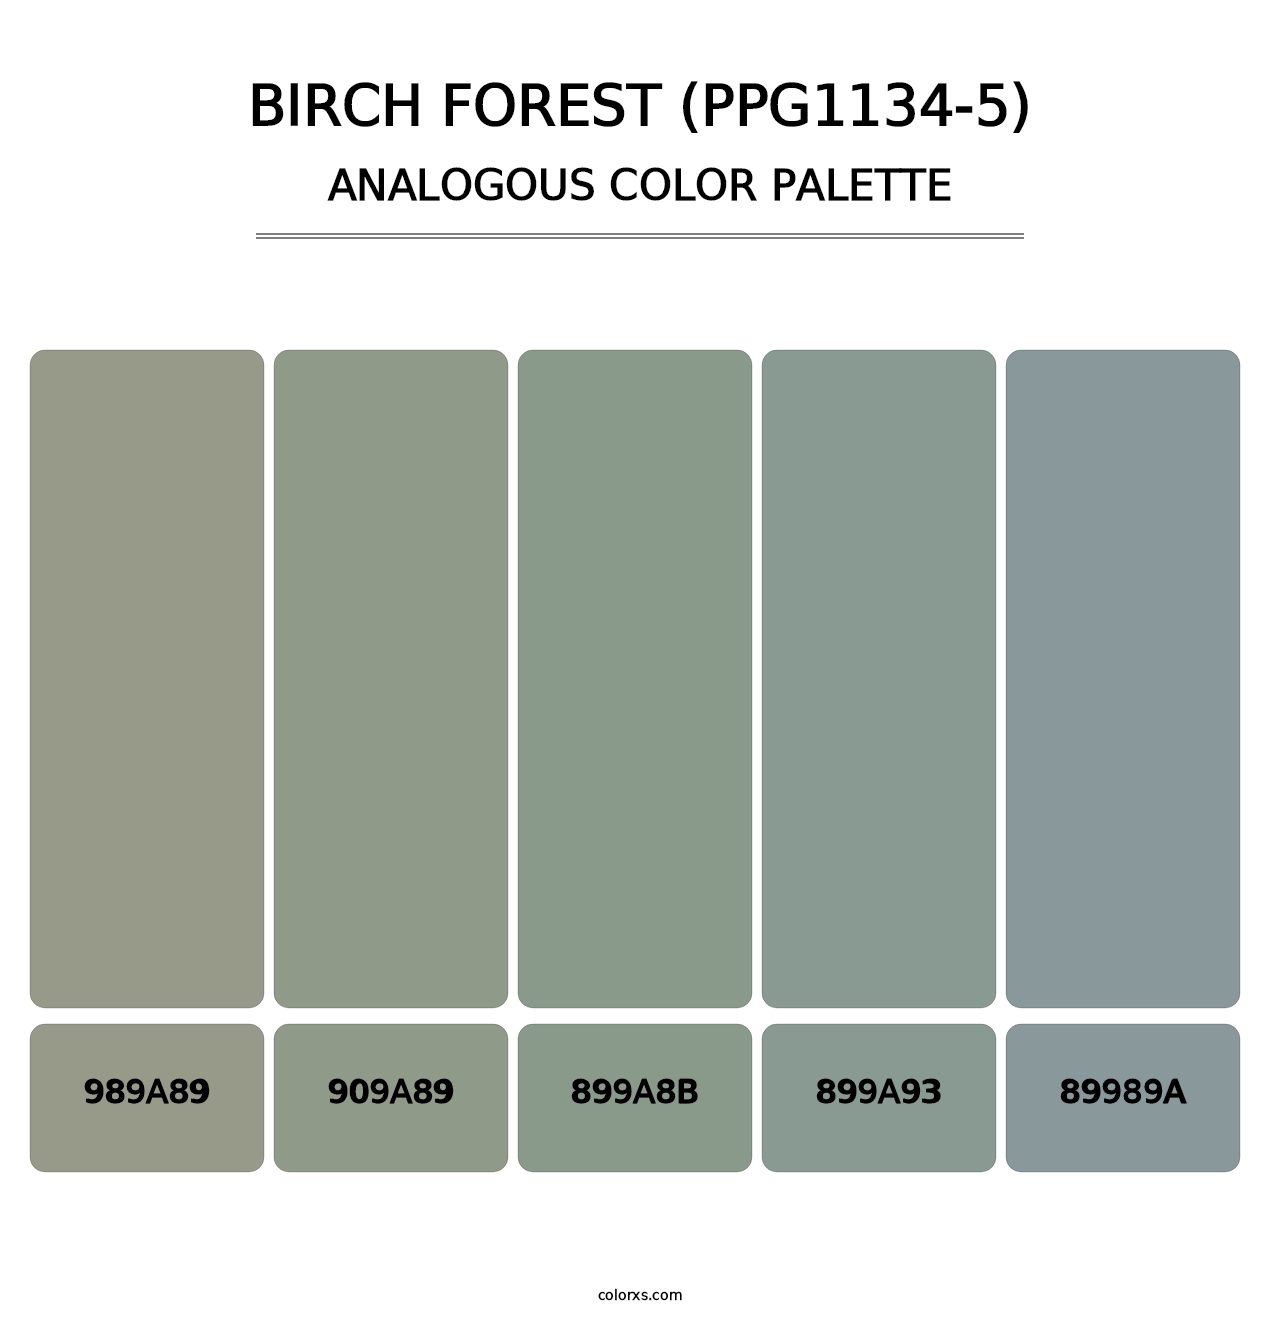 Birch Forest (PPG1134-5) - Analogous Color Palette